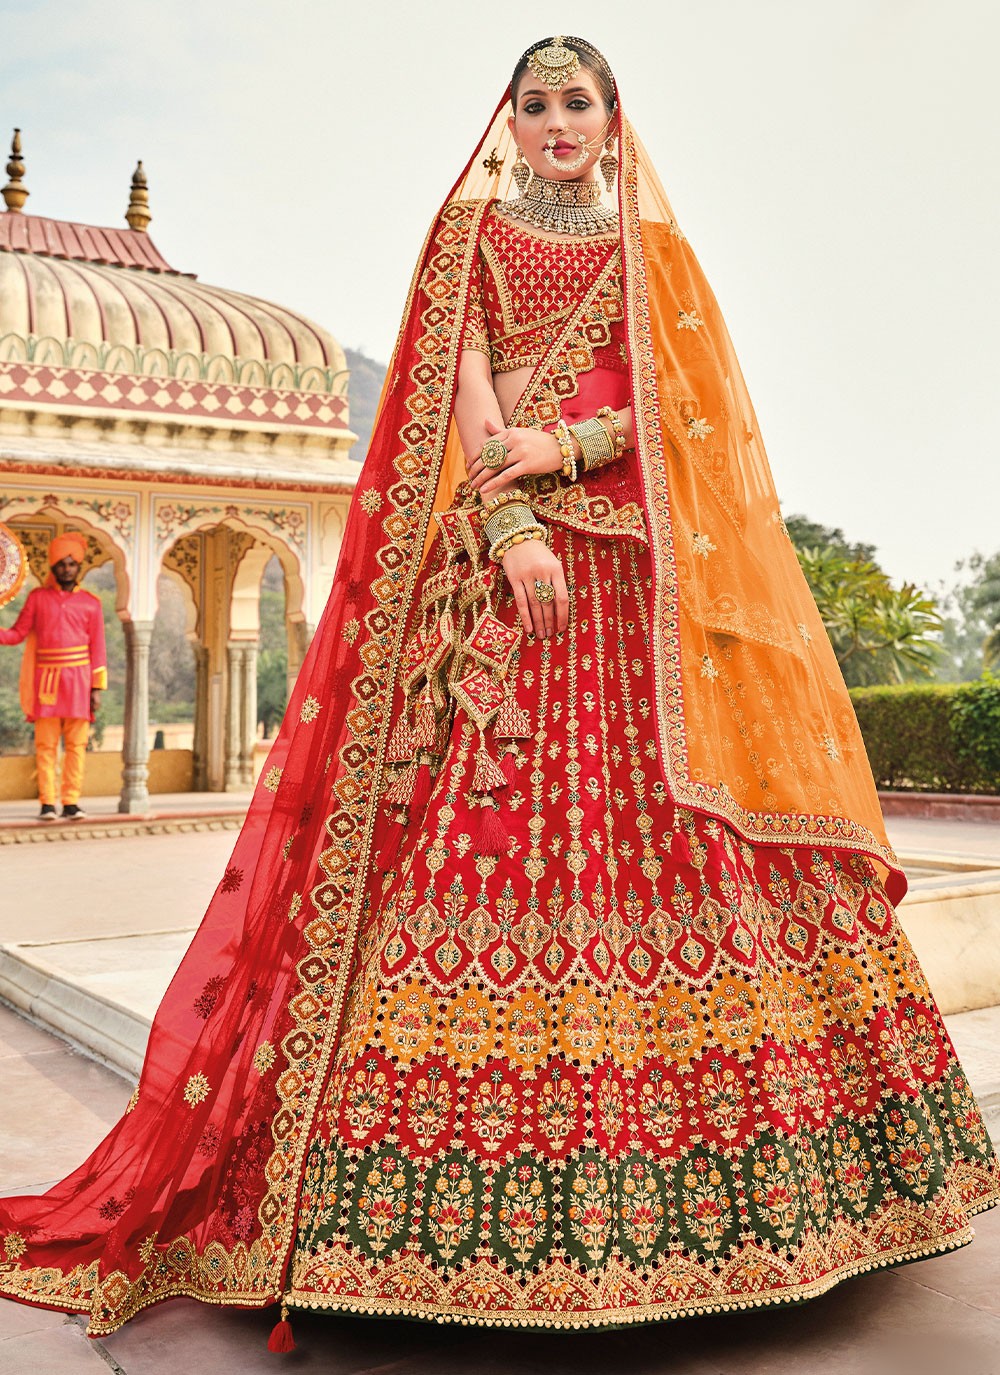 Heavy Red Golden Lehenga Choli for Indian Bridal Wear | Indian bridal wear,  Bridal wear, Indian wedding dress red